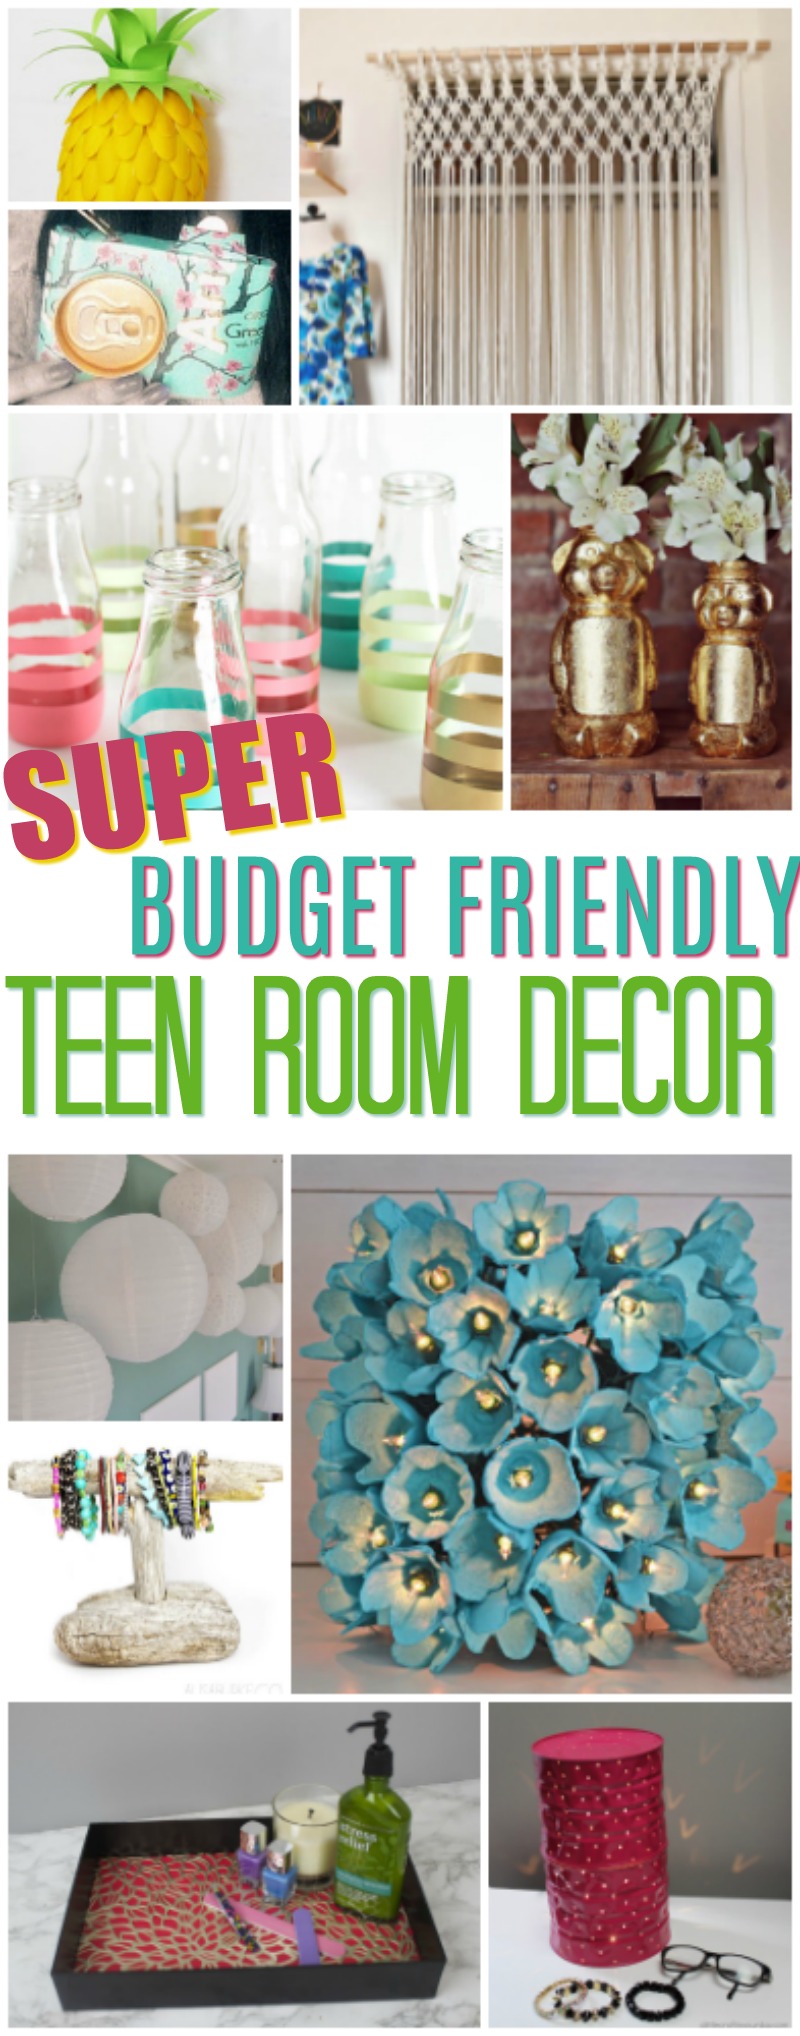 teen room decor, diy room decor ideas for teens, diy room decor, budget friendly room decor ideas for teens